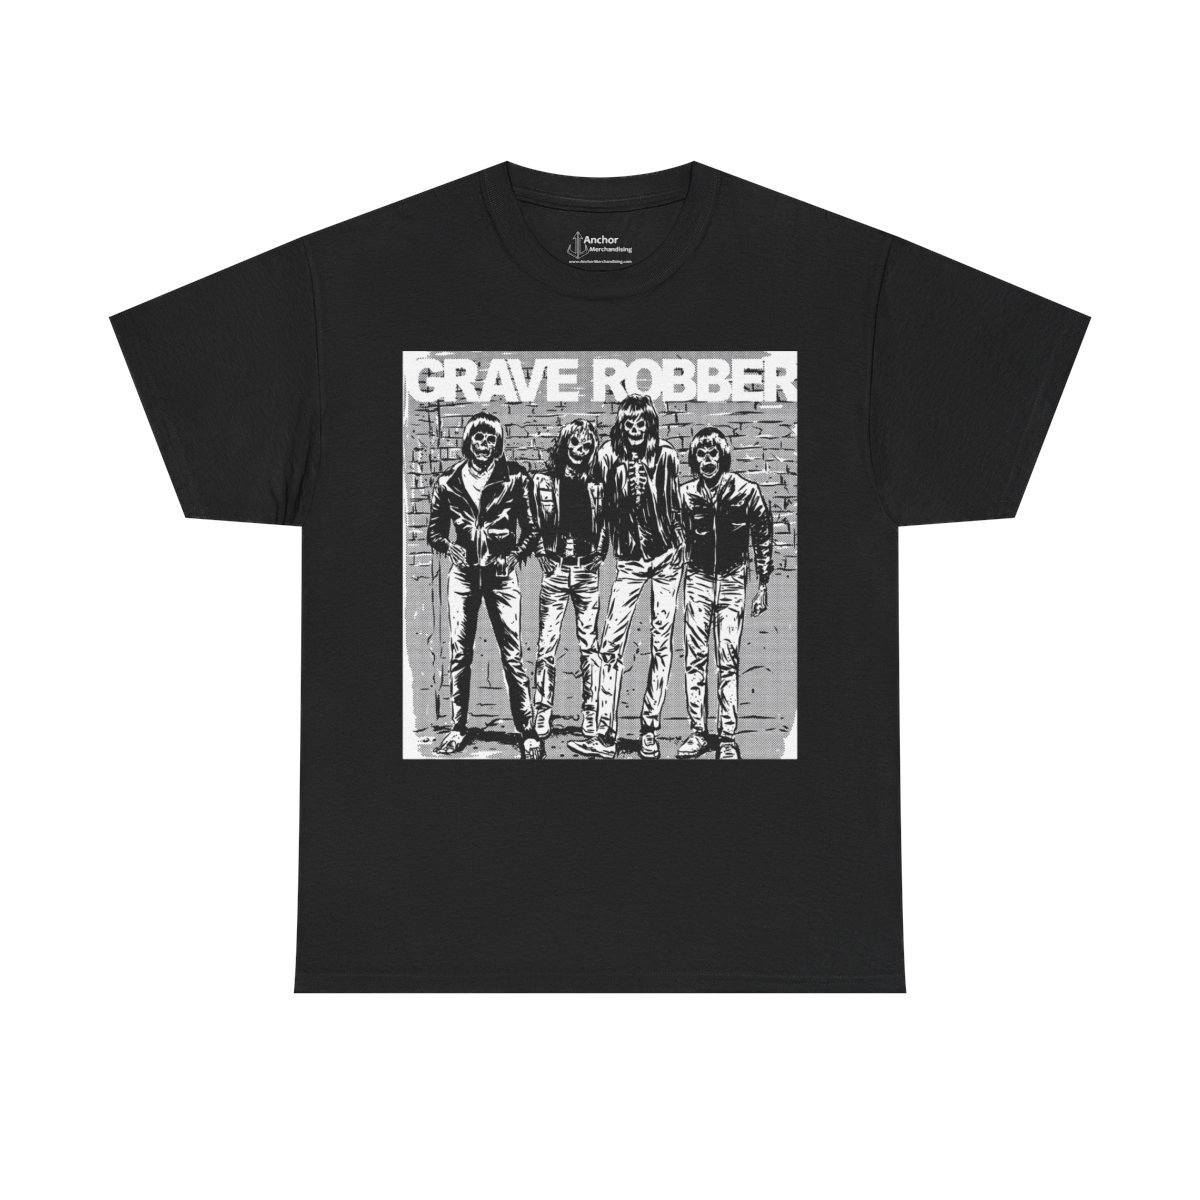 Grave Robber “Ramones” Short Sleeve Tshirt